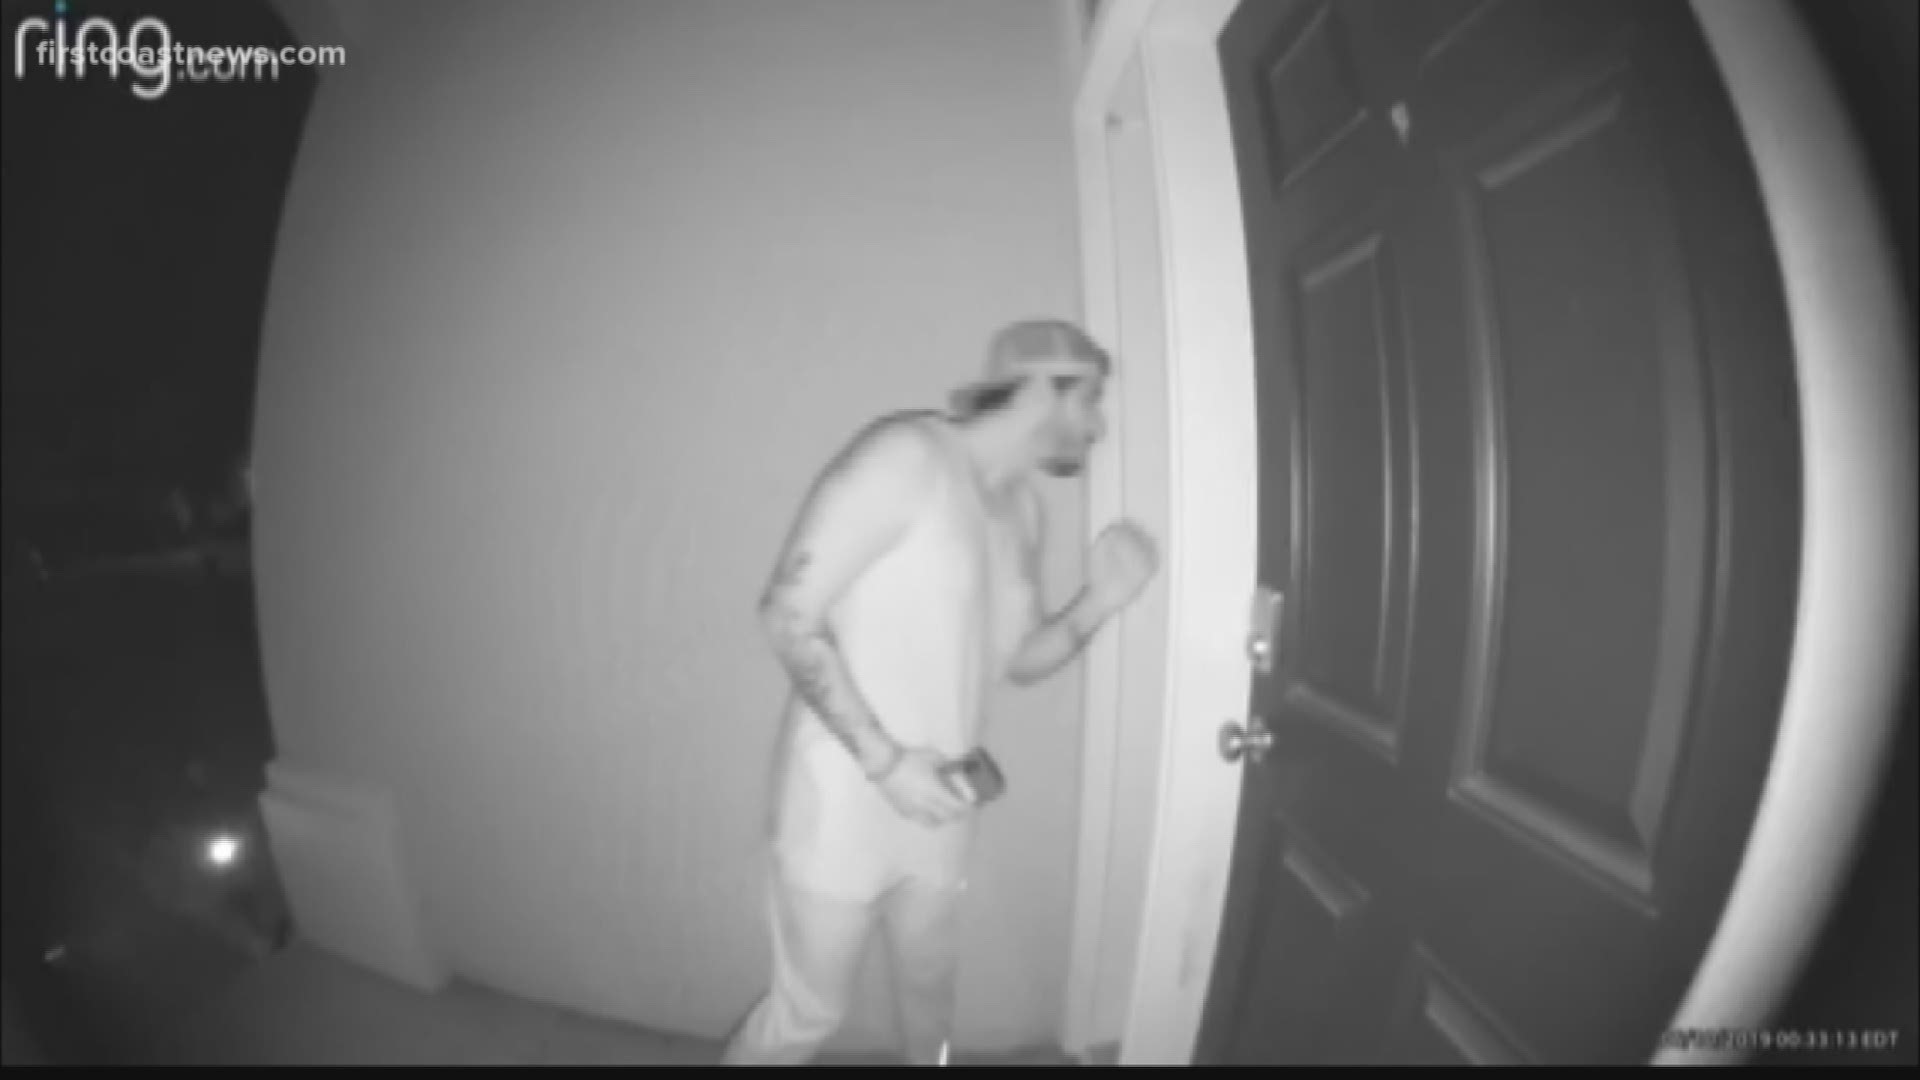 Suspected Peeping Tom Caught On Camera Firstcoastnews Com